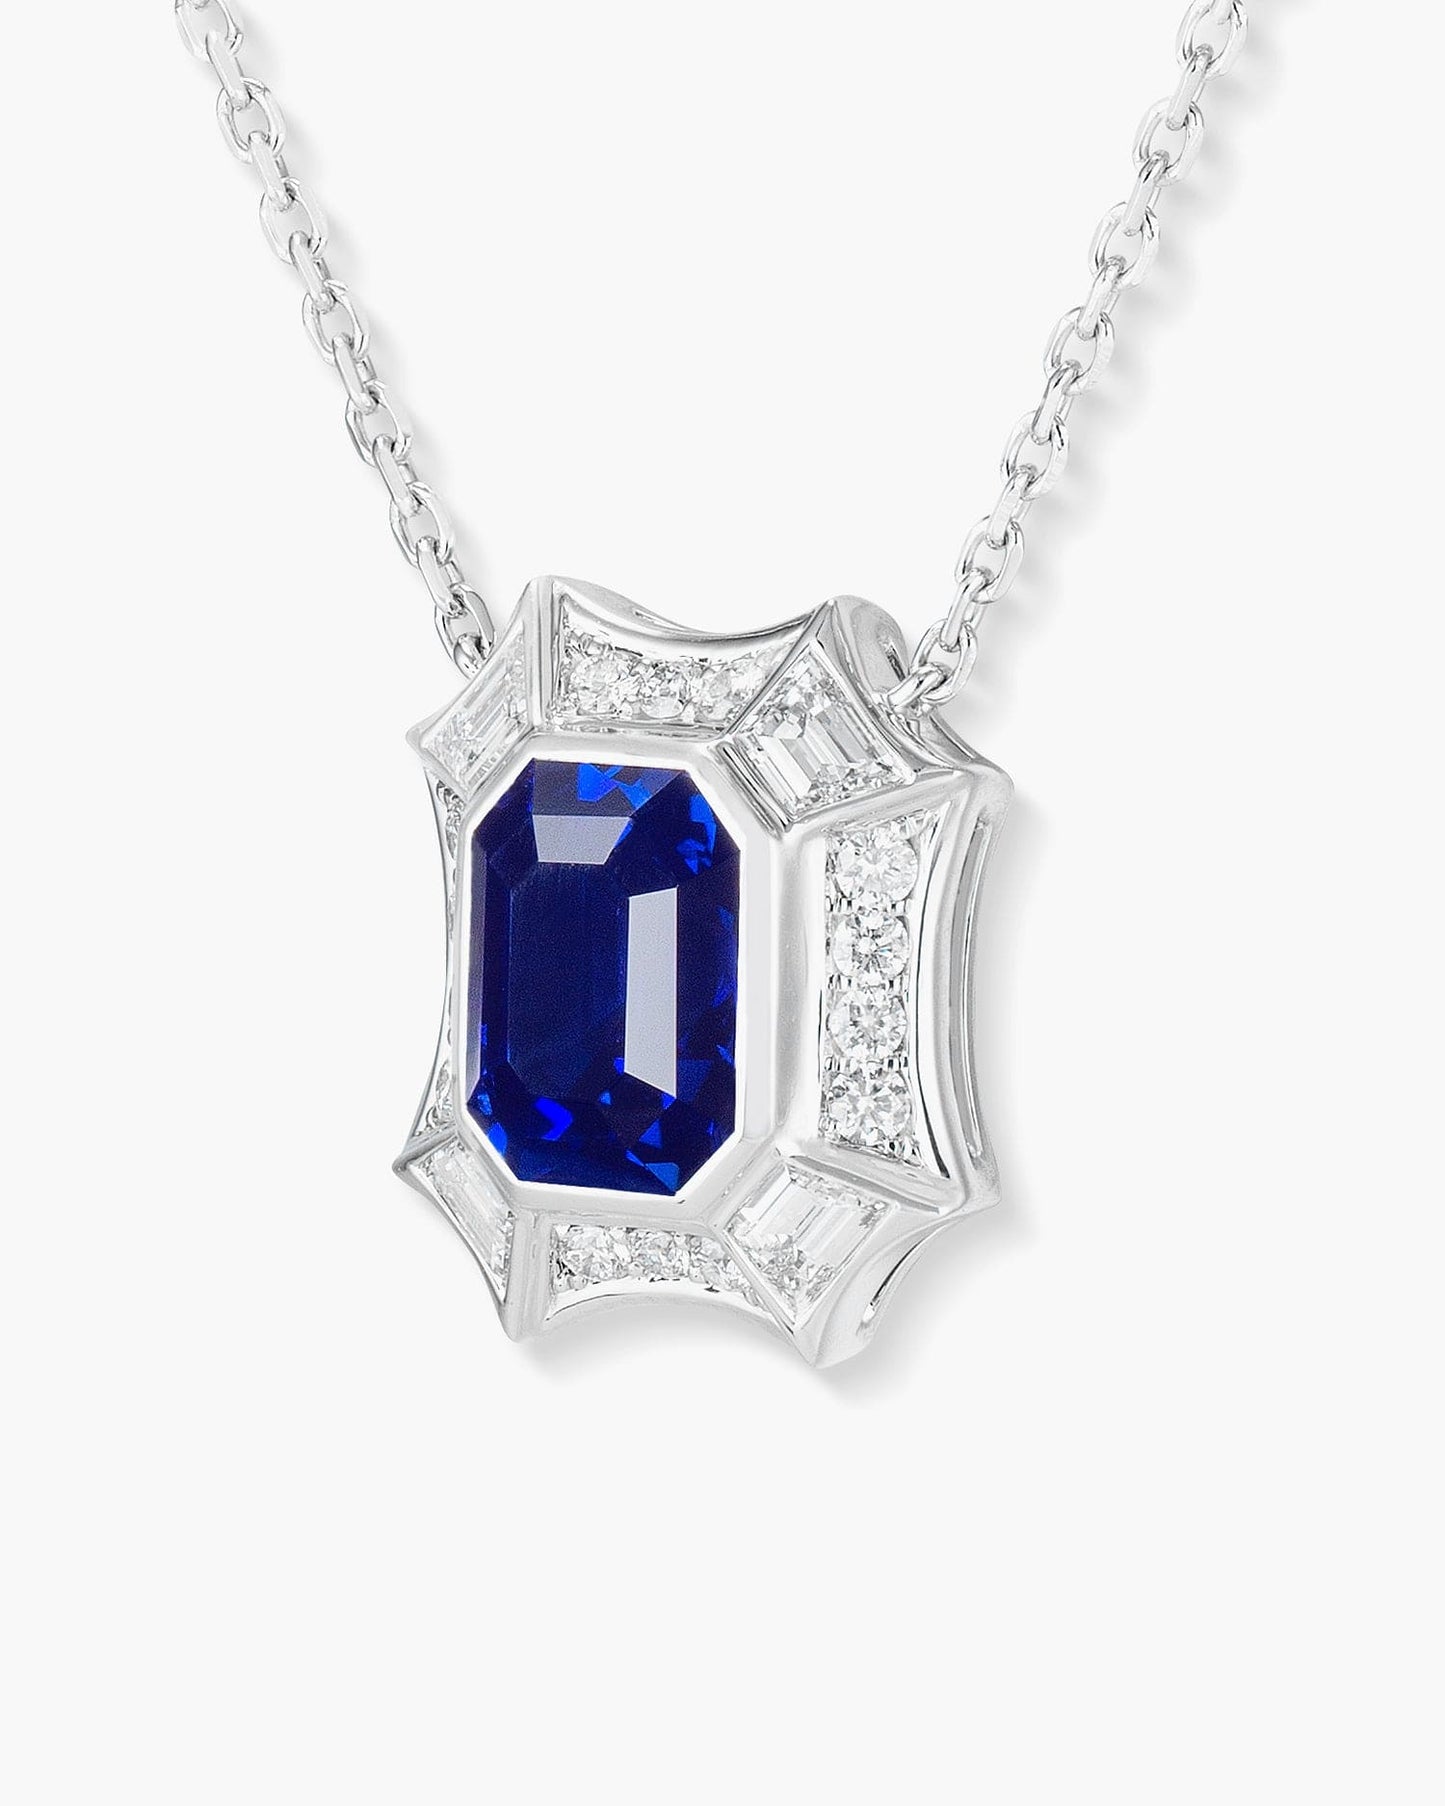 3.01 carat Emerald Cut Ceylon Sapphire and Diamond Pendant Necklace